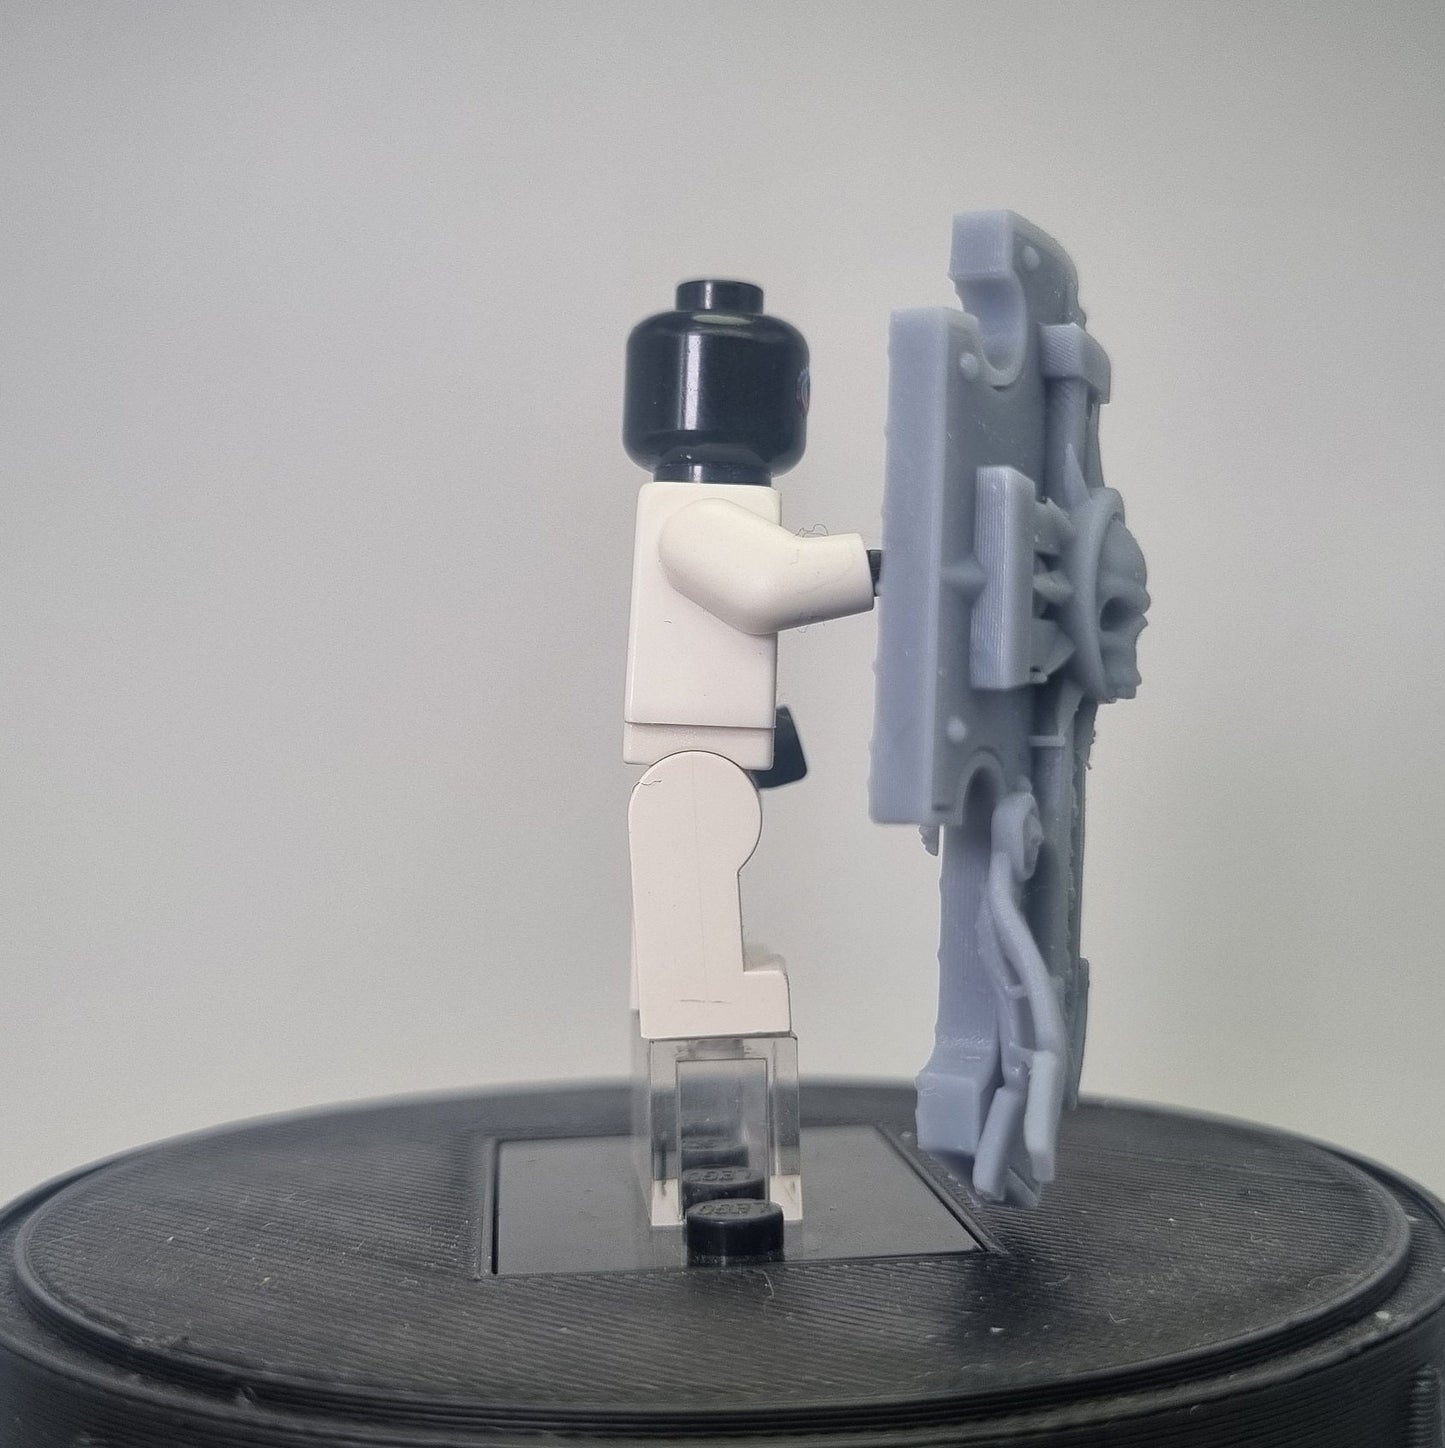 Custom 3D printed building toy galaxy wars giant cross shield!